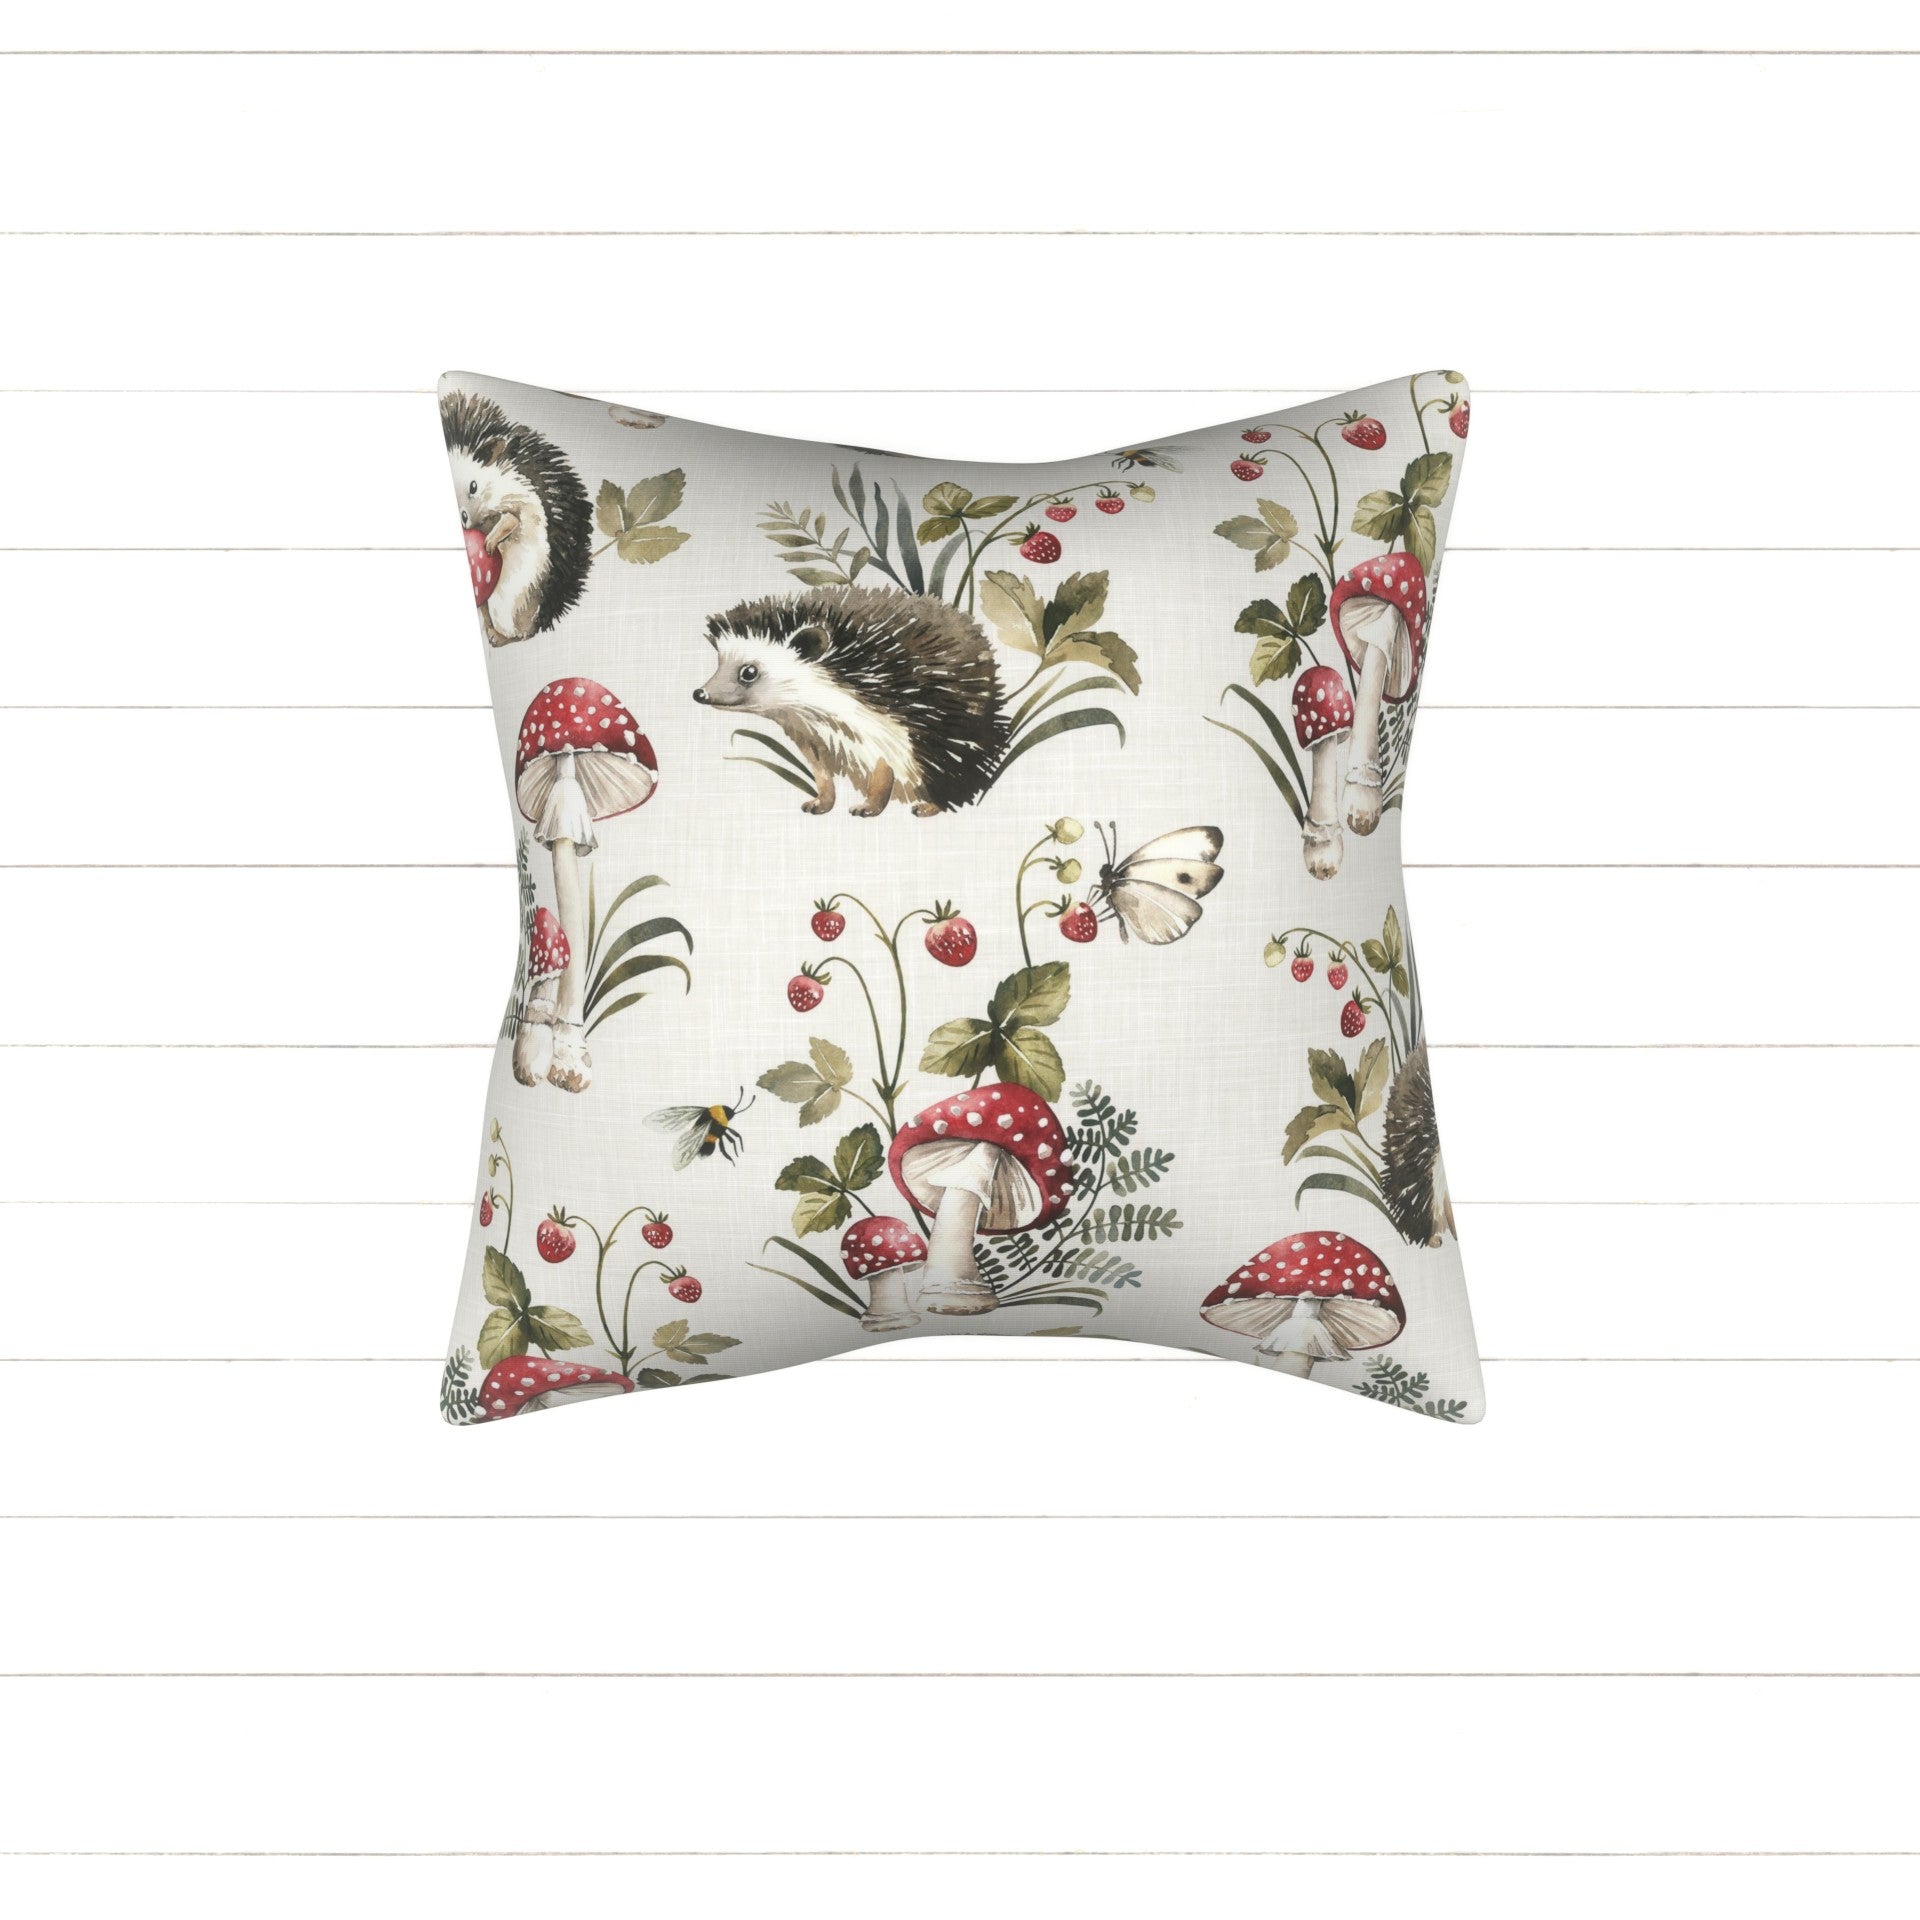 Hedgehog and mushroom by MirabellePrint / Off-white linen textured background Fabric, Raspberry Creek Fabrics